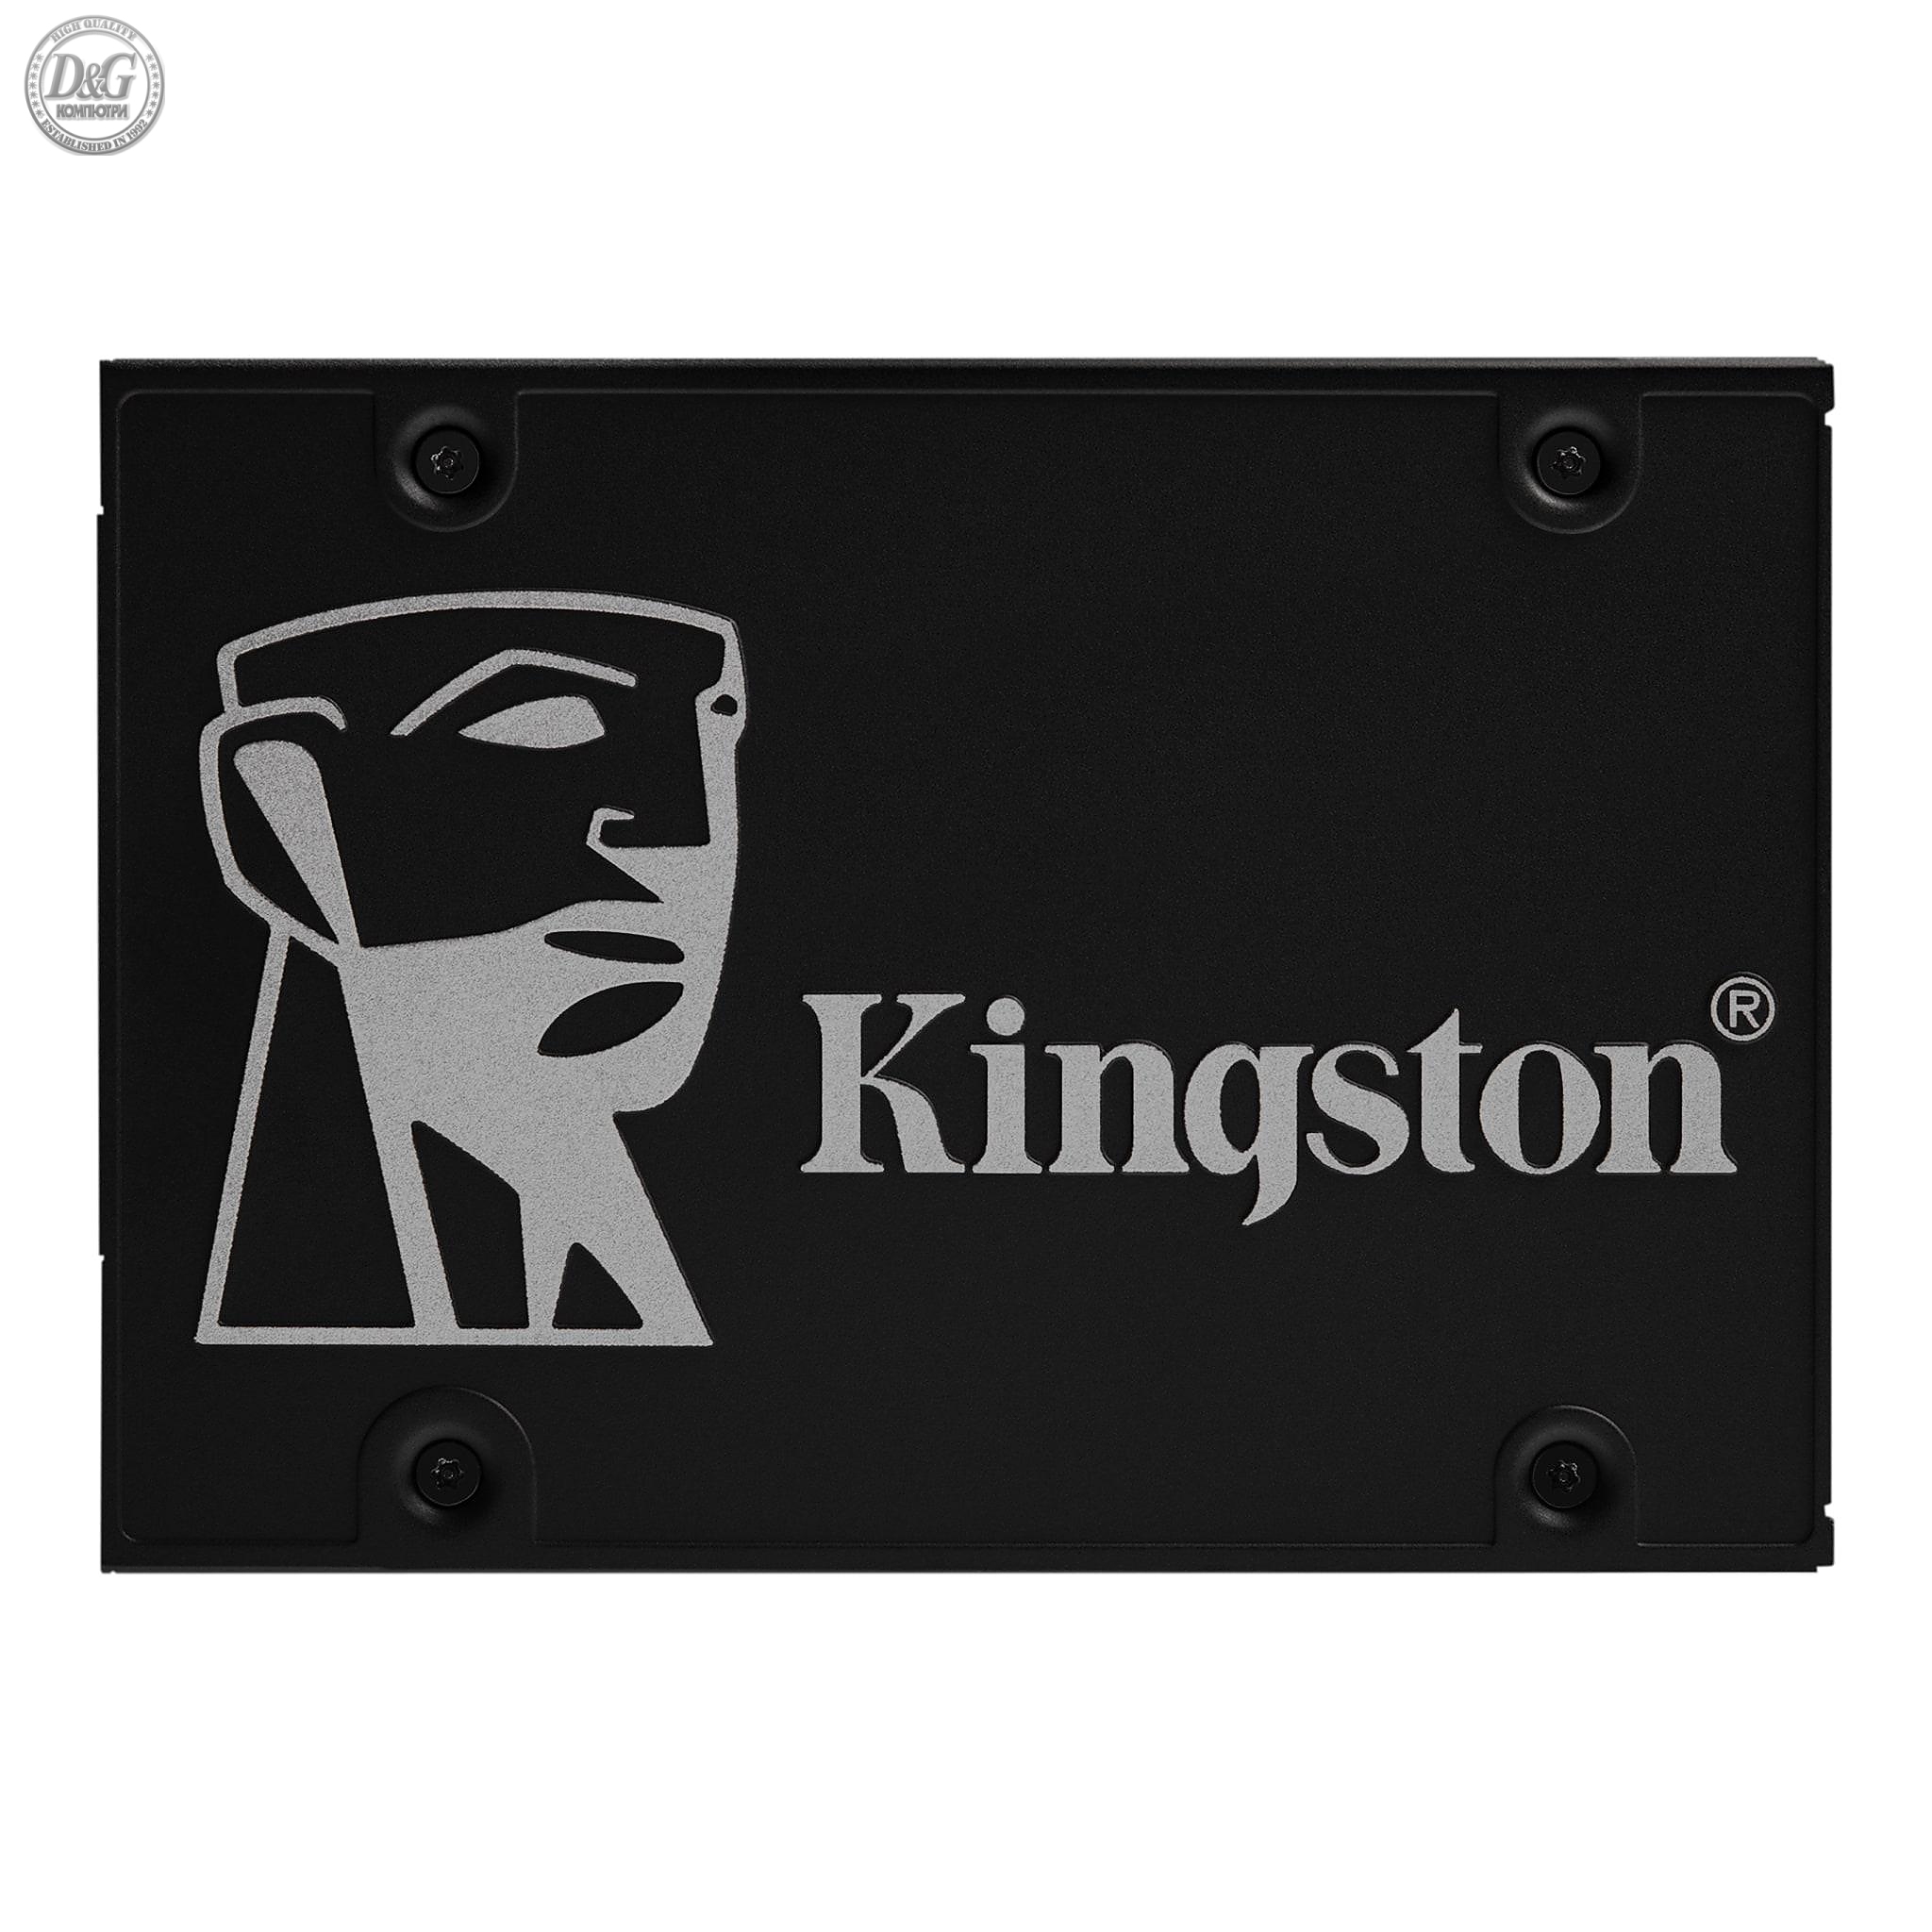 Solid State Drive (SSD) Kingston KC600 512 GB